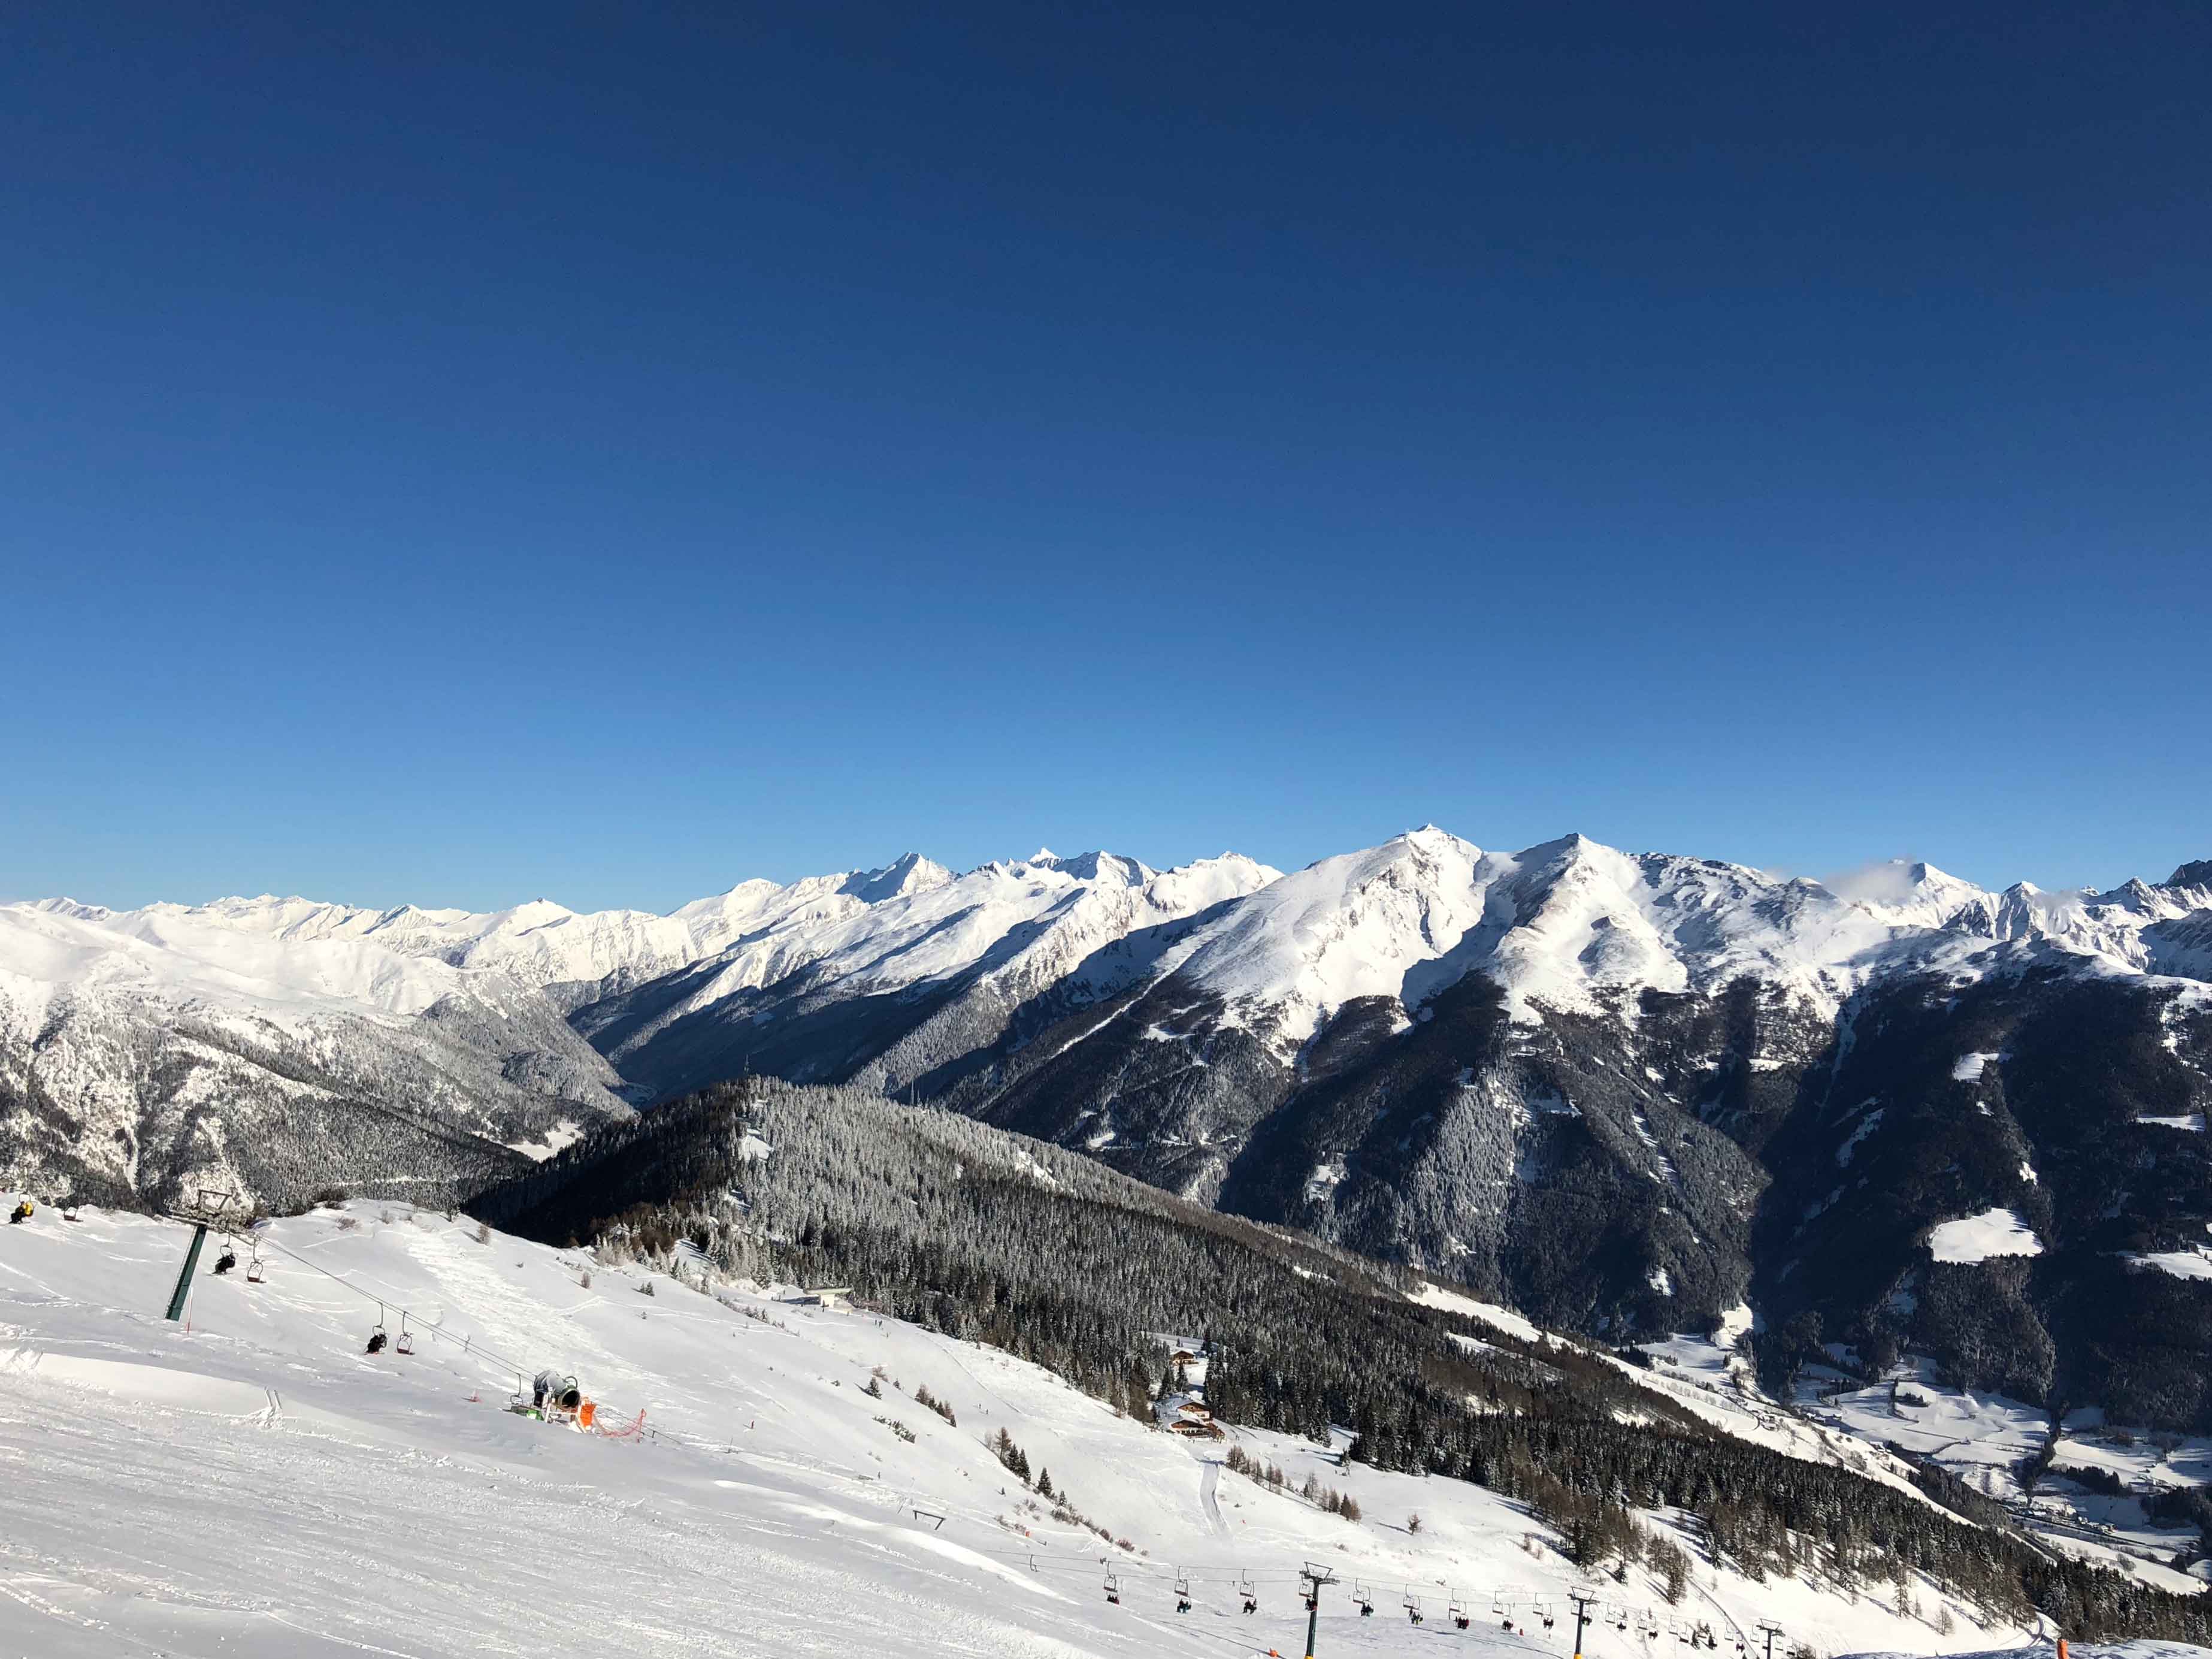 Rosskopf/Monte Cavallo ski resort